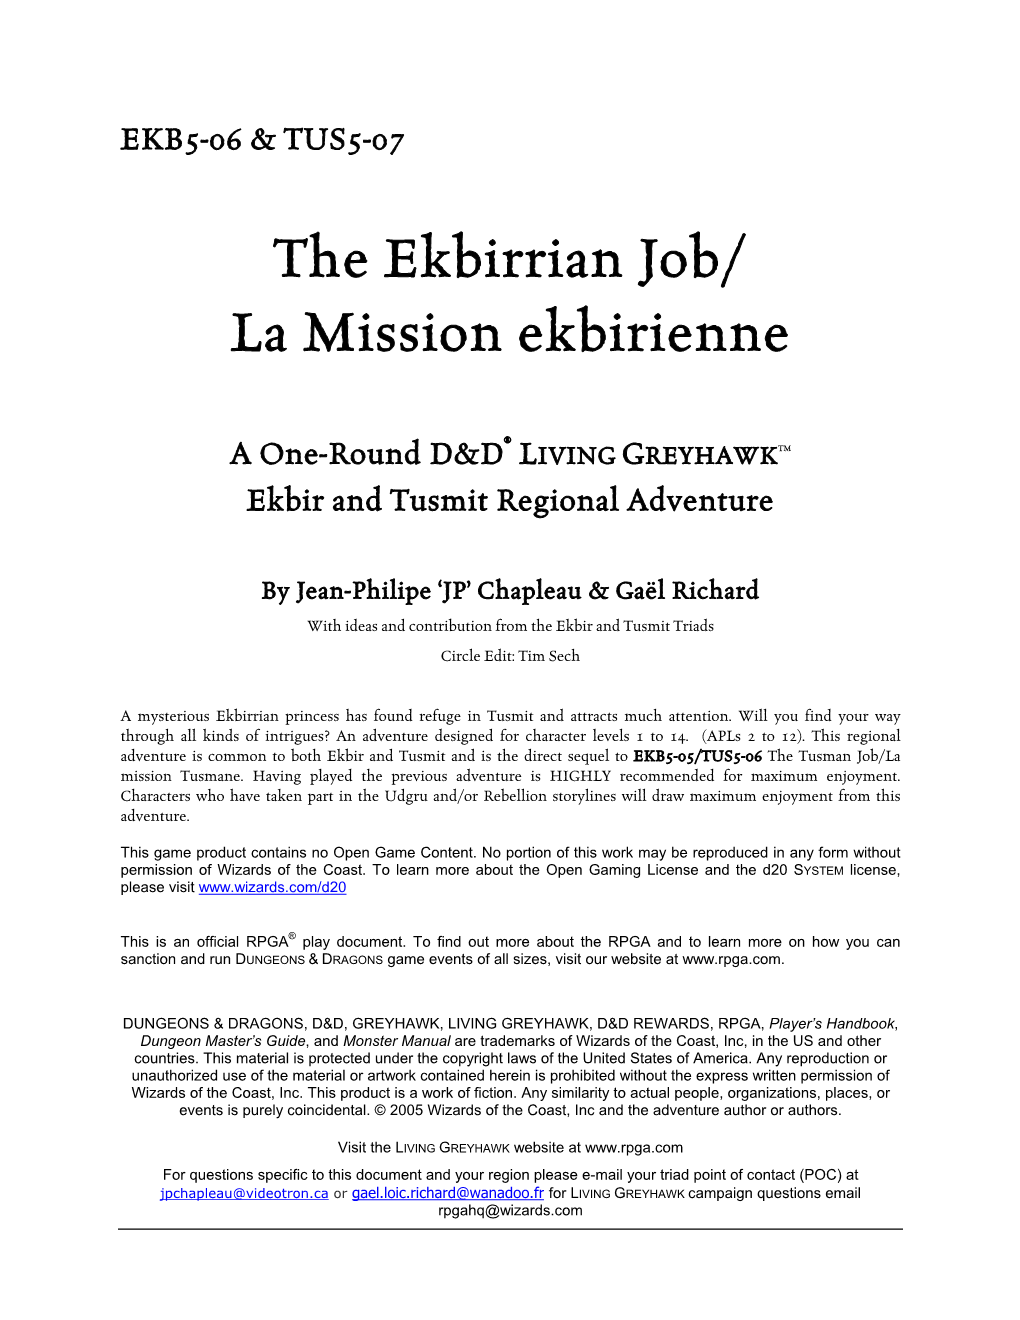 The Ekbirrian Job/ La Mission Ekbirienne